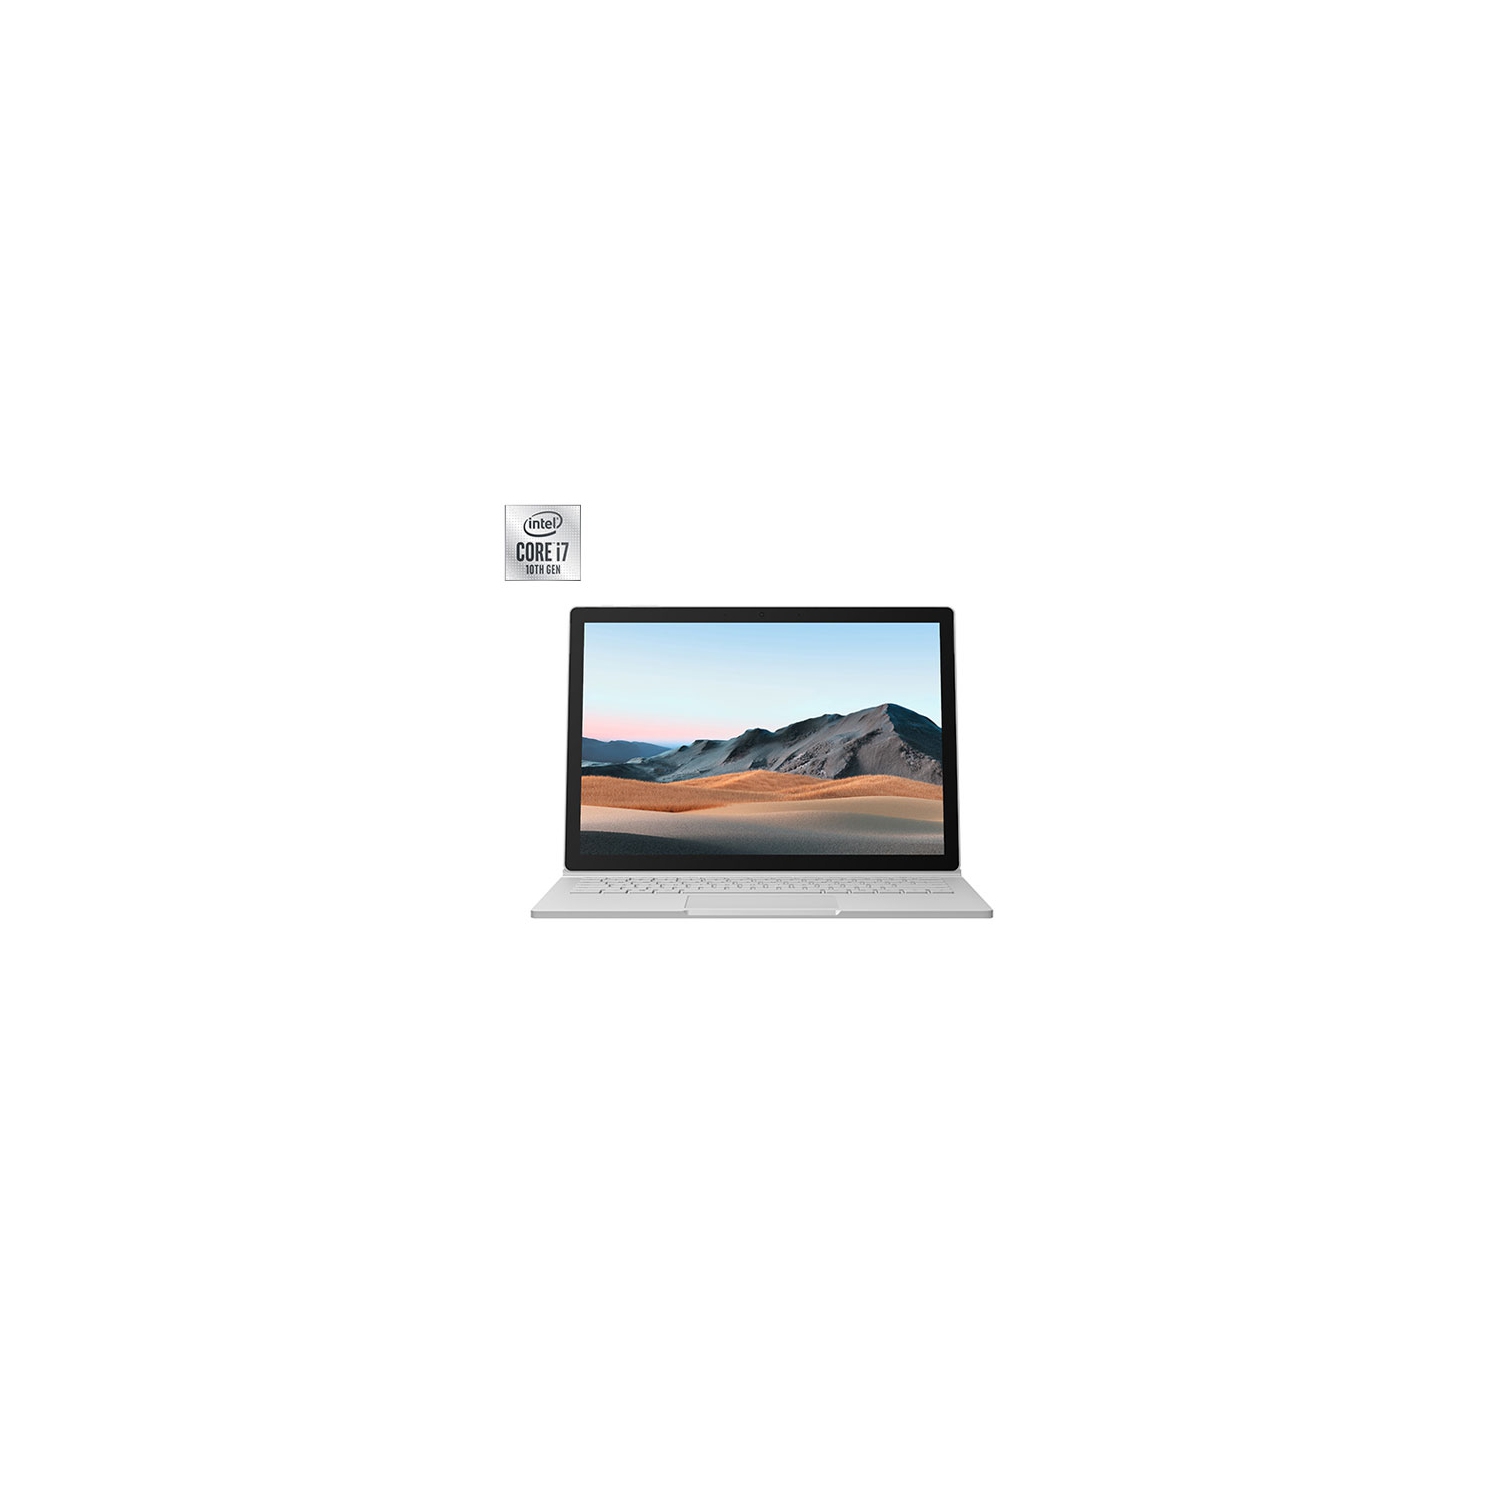 Open Box - Microsoft Surface Book 3 13.5" 2-in-1 Laptop - Platinum (Intel Ci7-1065G7/512GB SSD/32GB RAM) - French